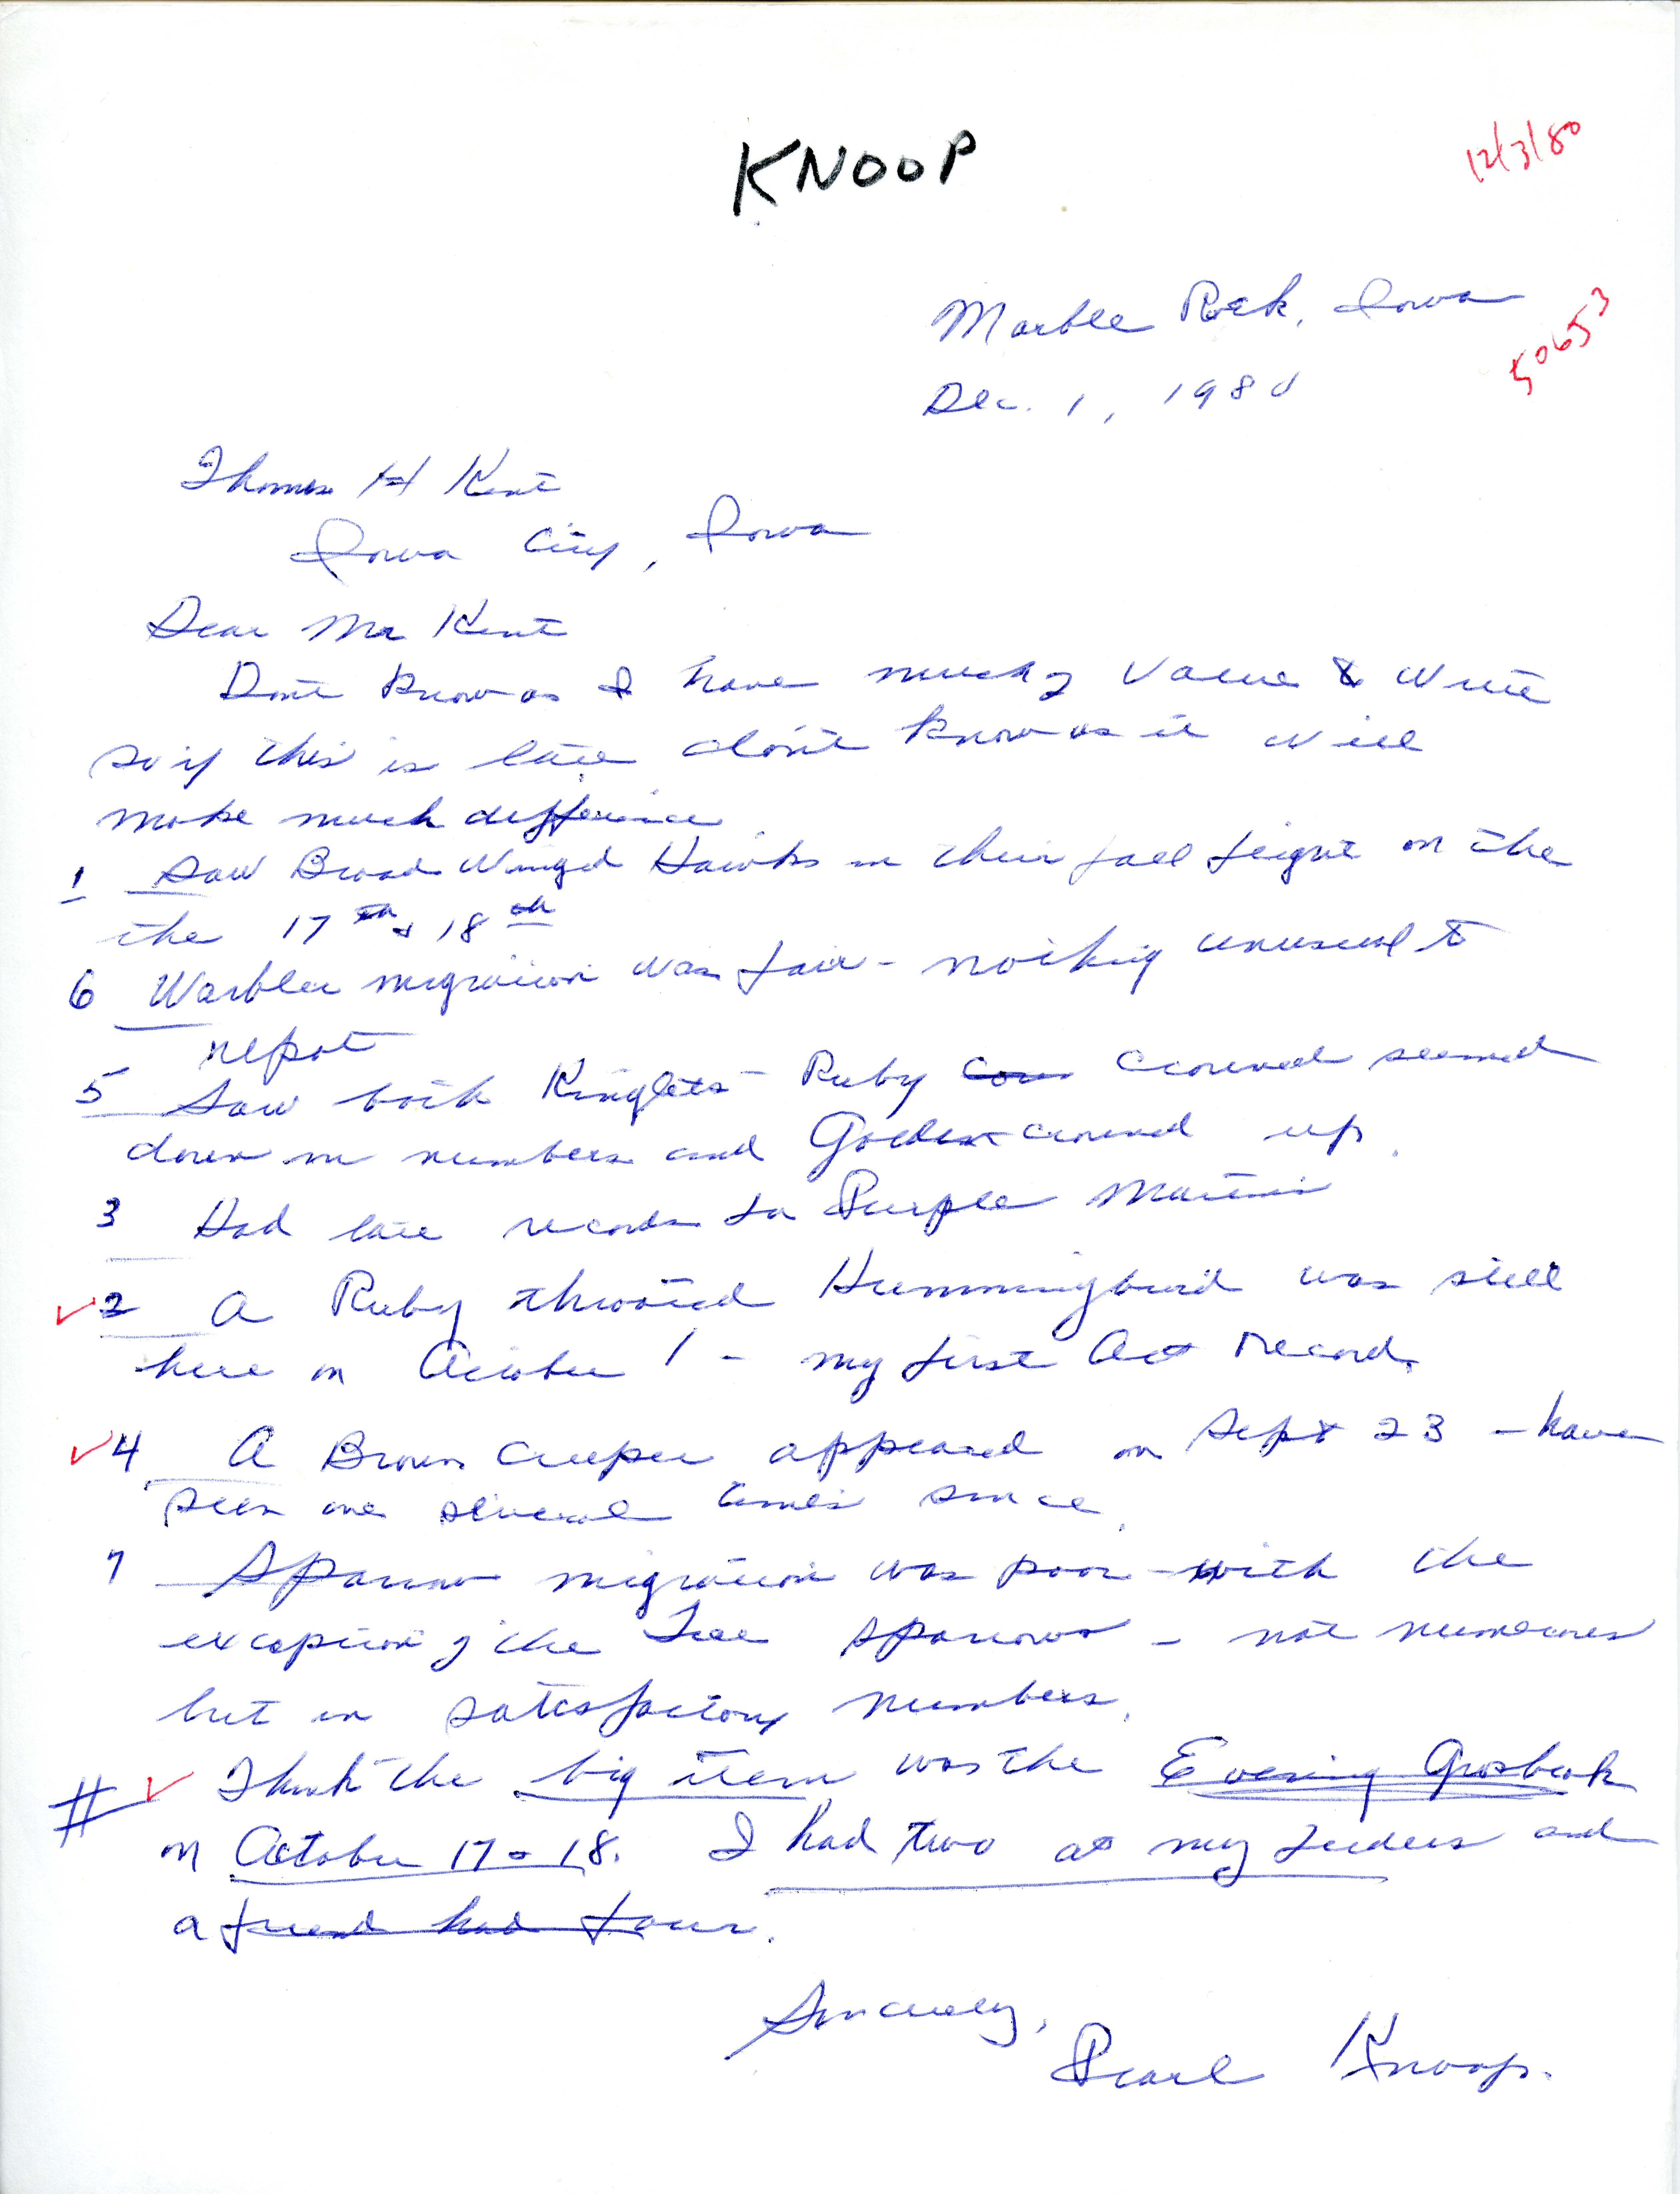 Pearl Knoop letter to Thomas H. Kent regarding bird sightings, December 1, 1980